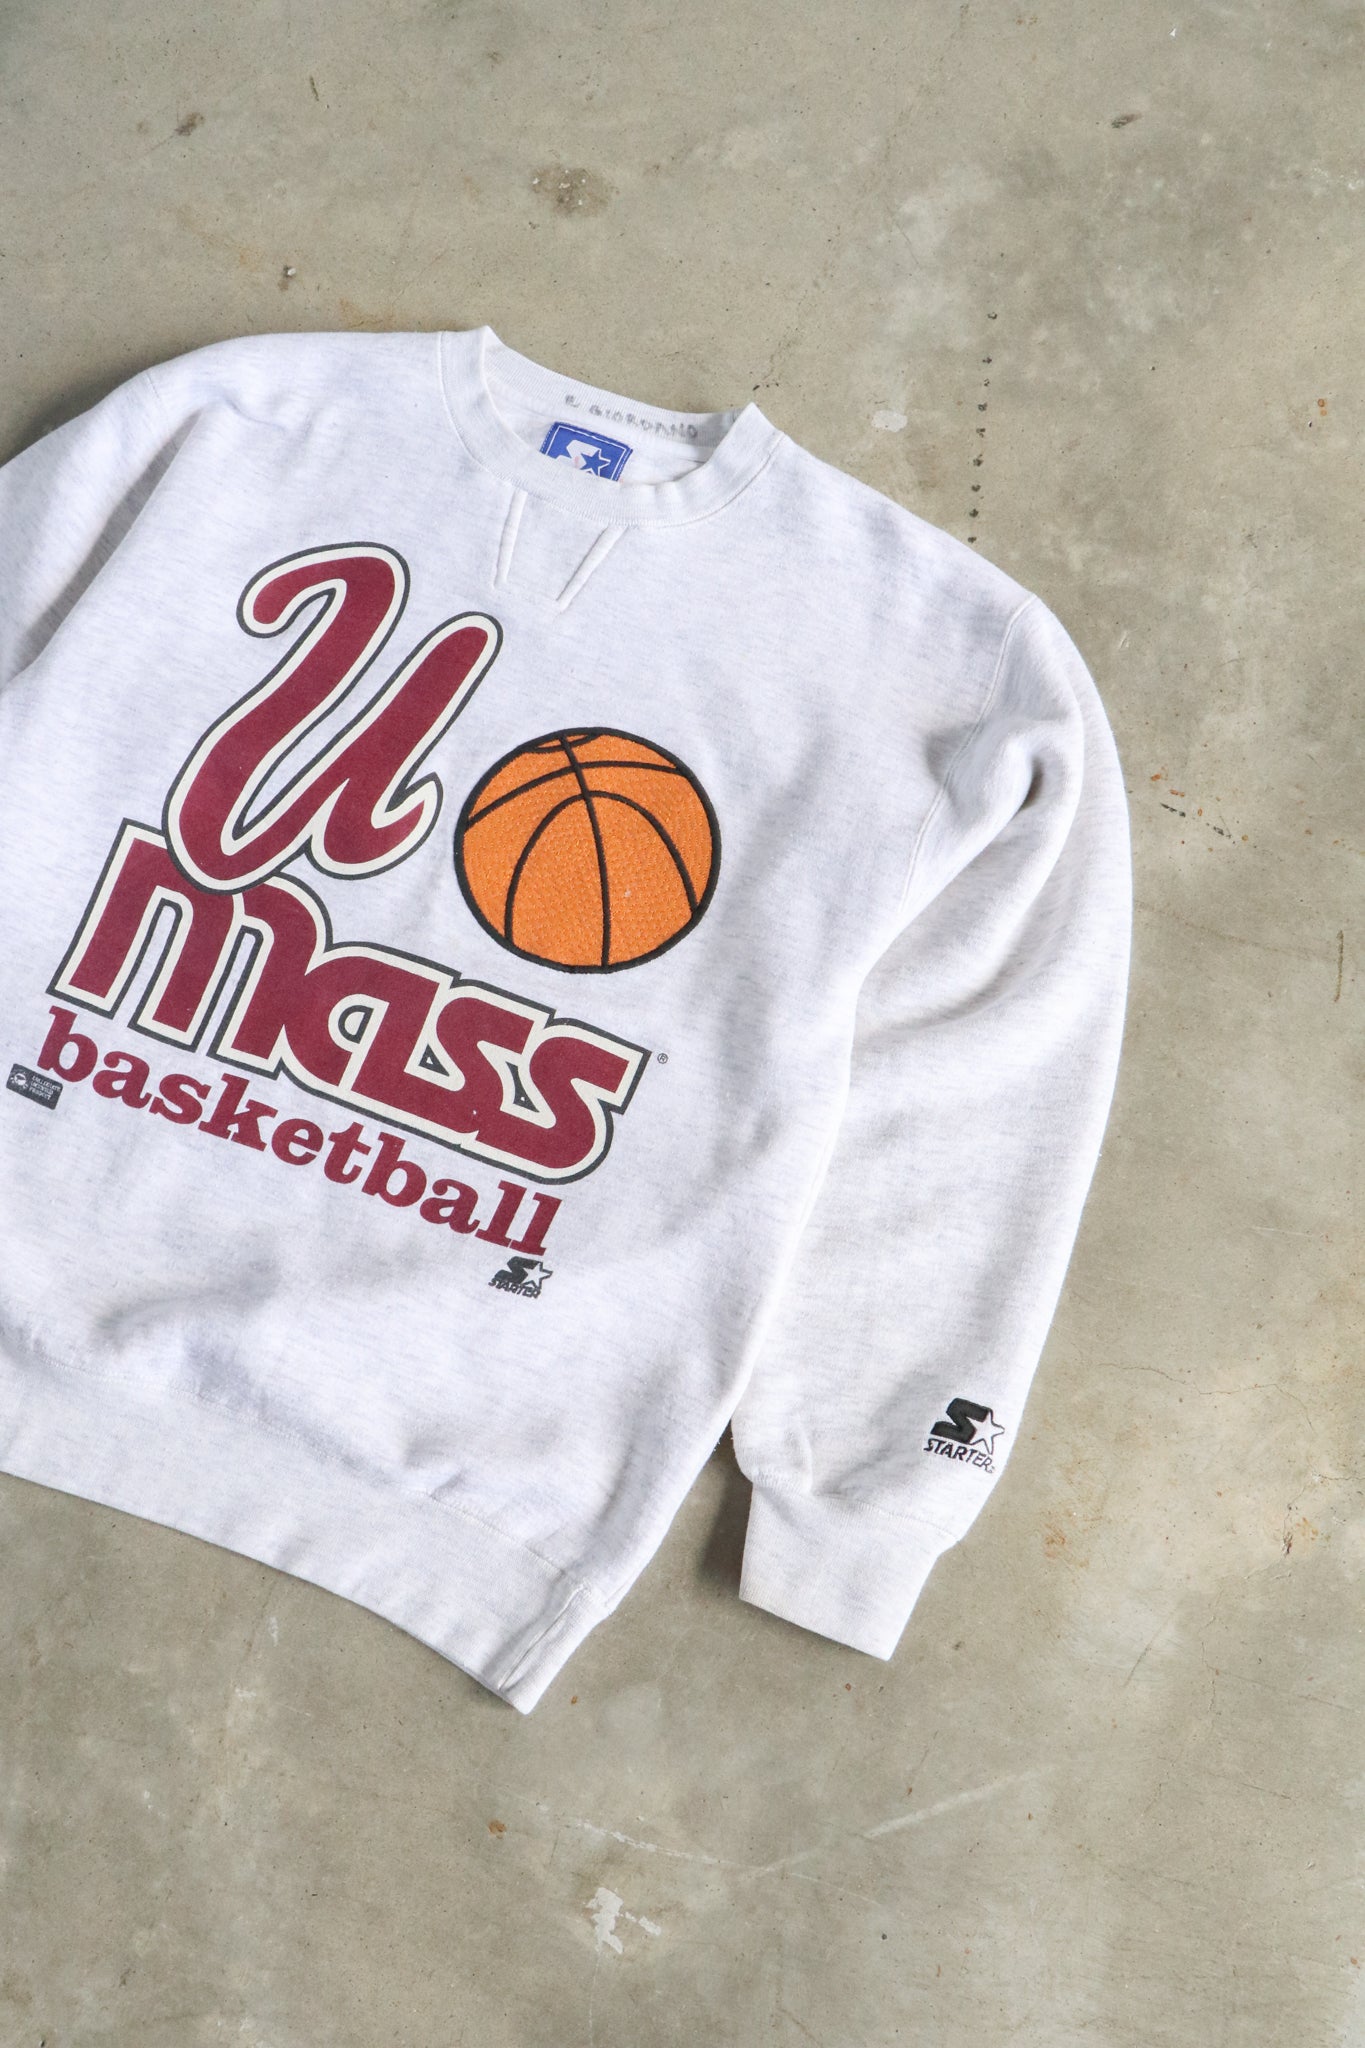 Vintage UMass Basketball Sweater Medium